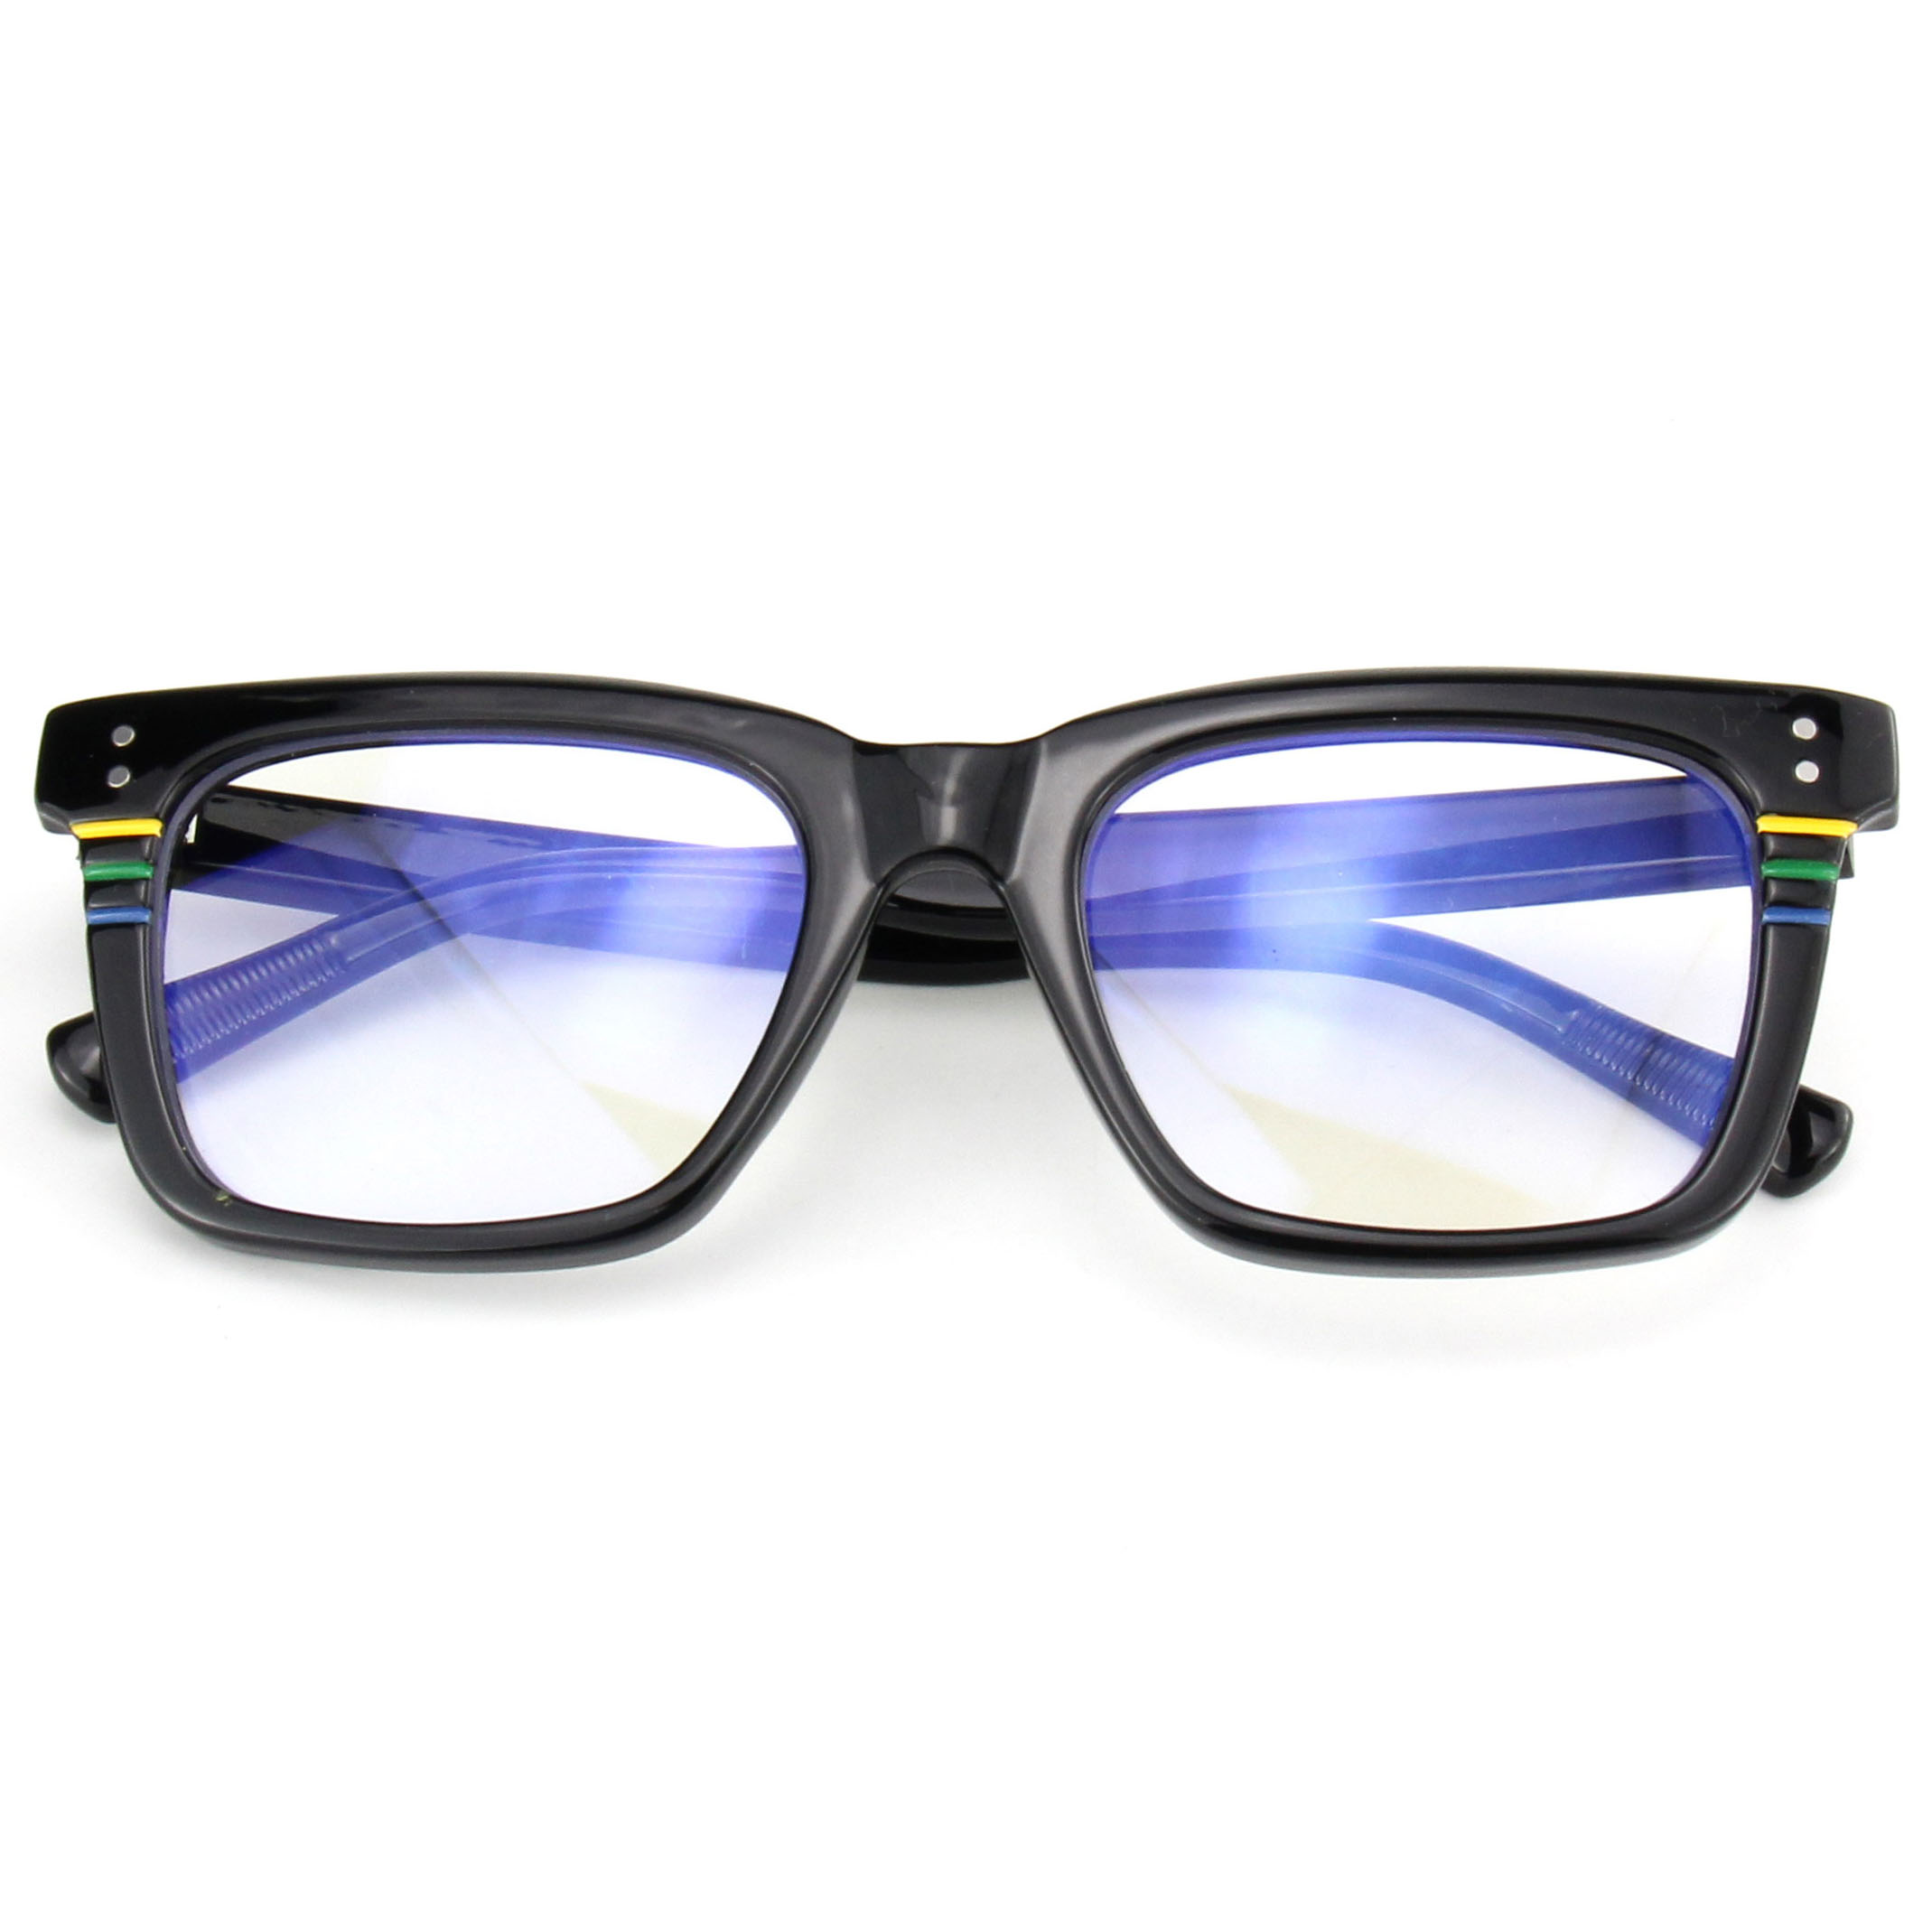 Eugenia optical glasses For optical frame glasses-2